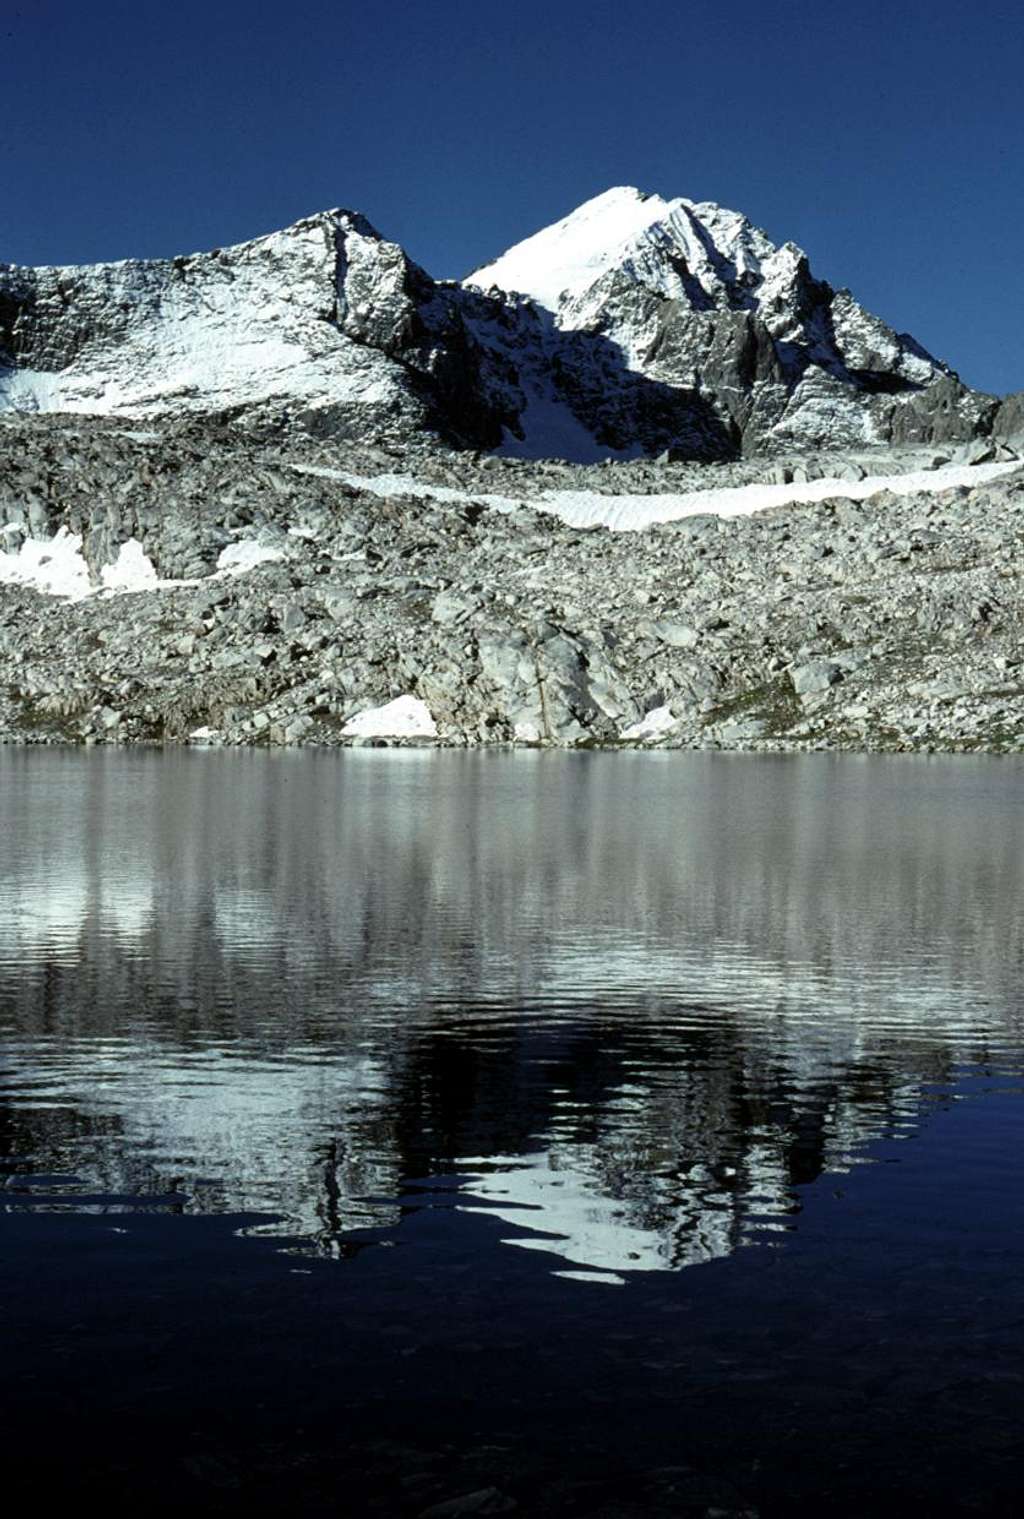 Mount Goddard and Wanda Lake